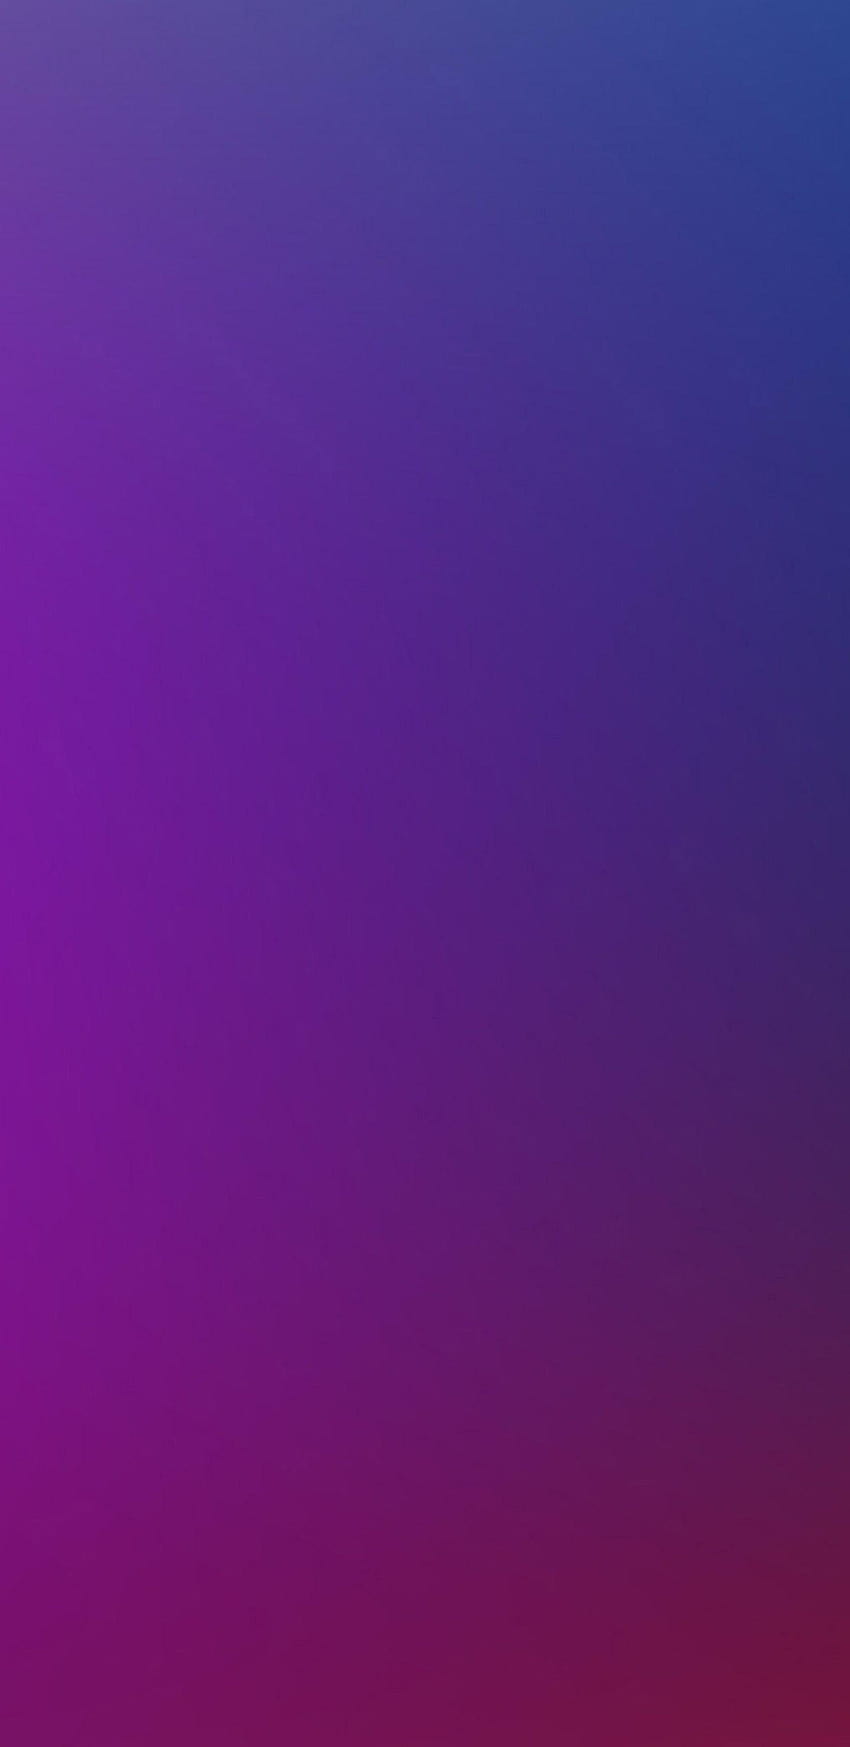 sg22 blue purple night work gradation hazy Samsung Galaxy Note 9 HD phone wallpaper